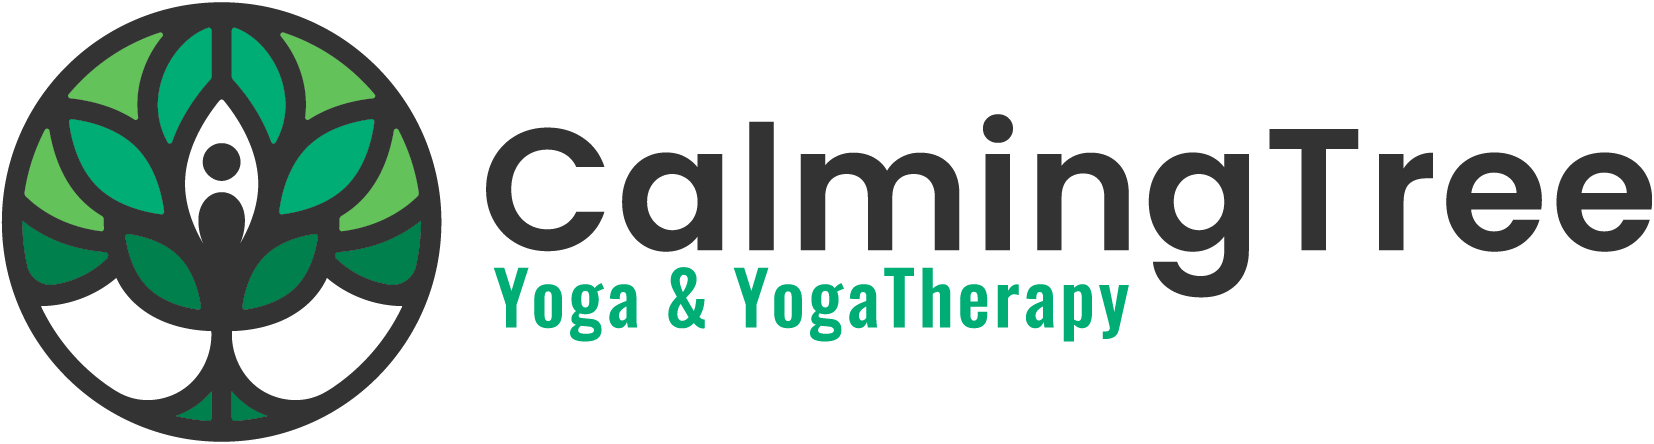 Calming Tree logo